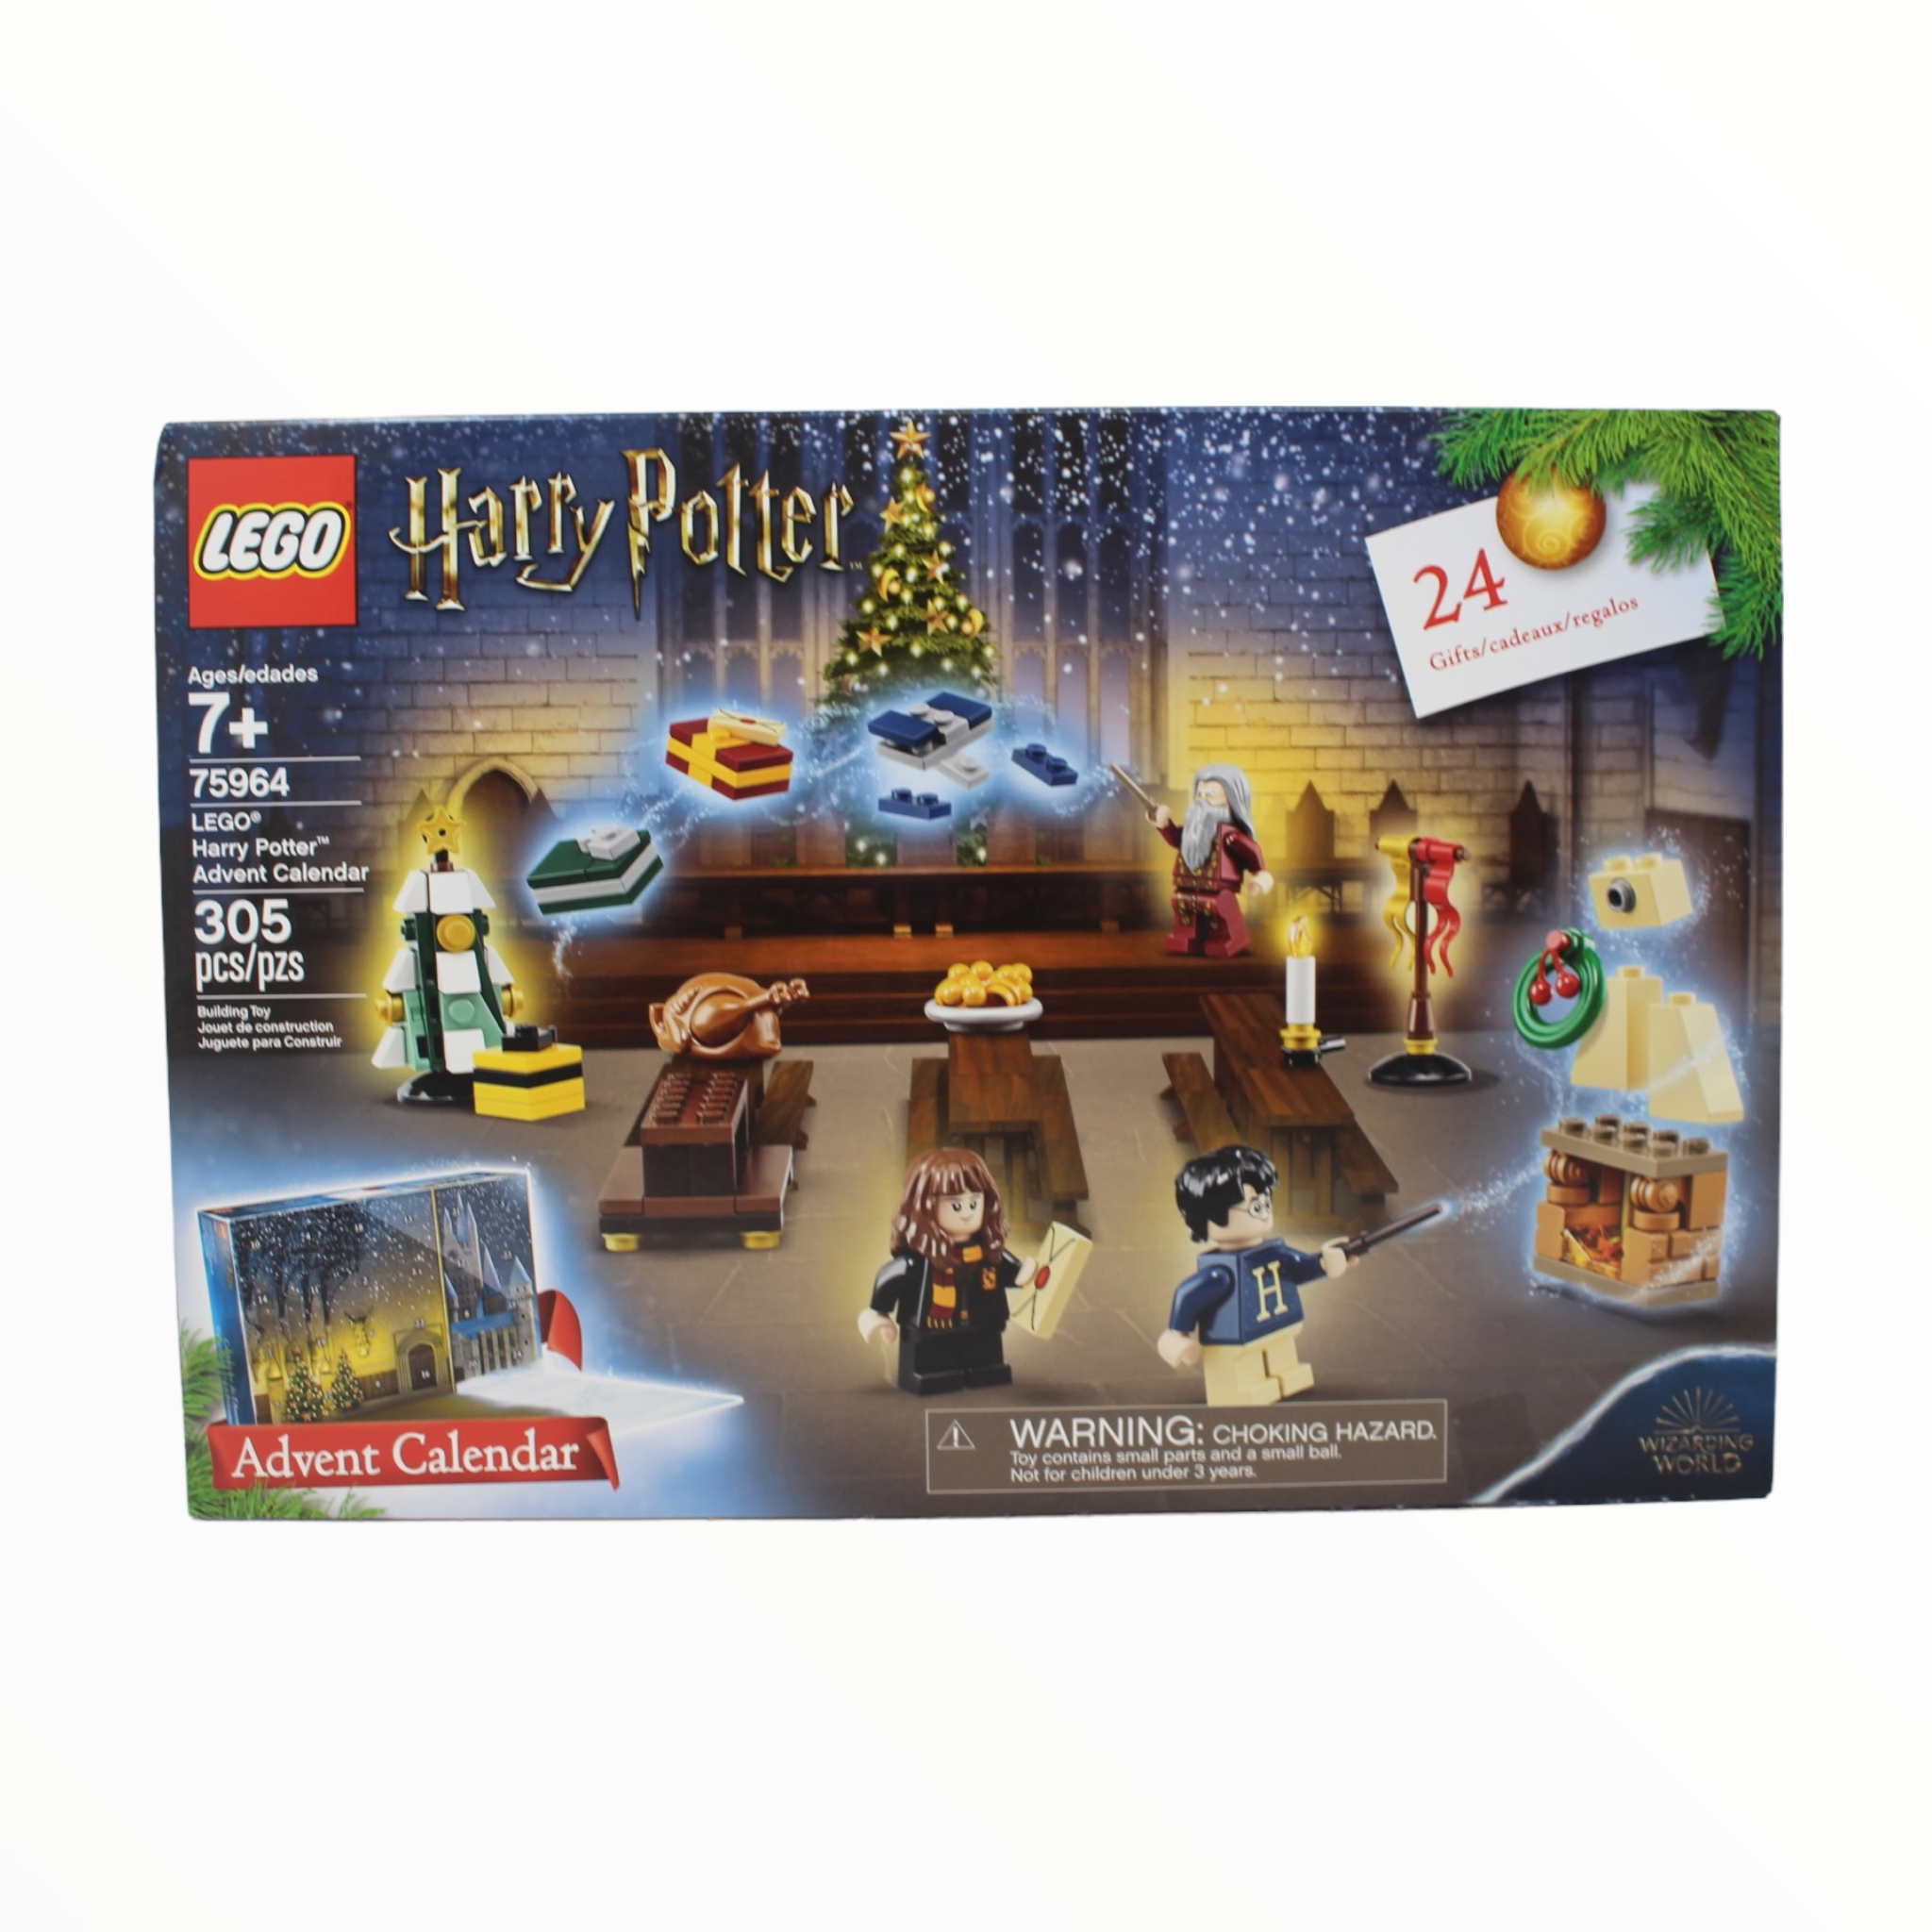 Retired Set 75964 Harry Potter Advent Calendar (2019)